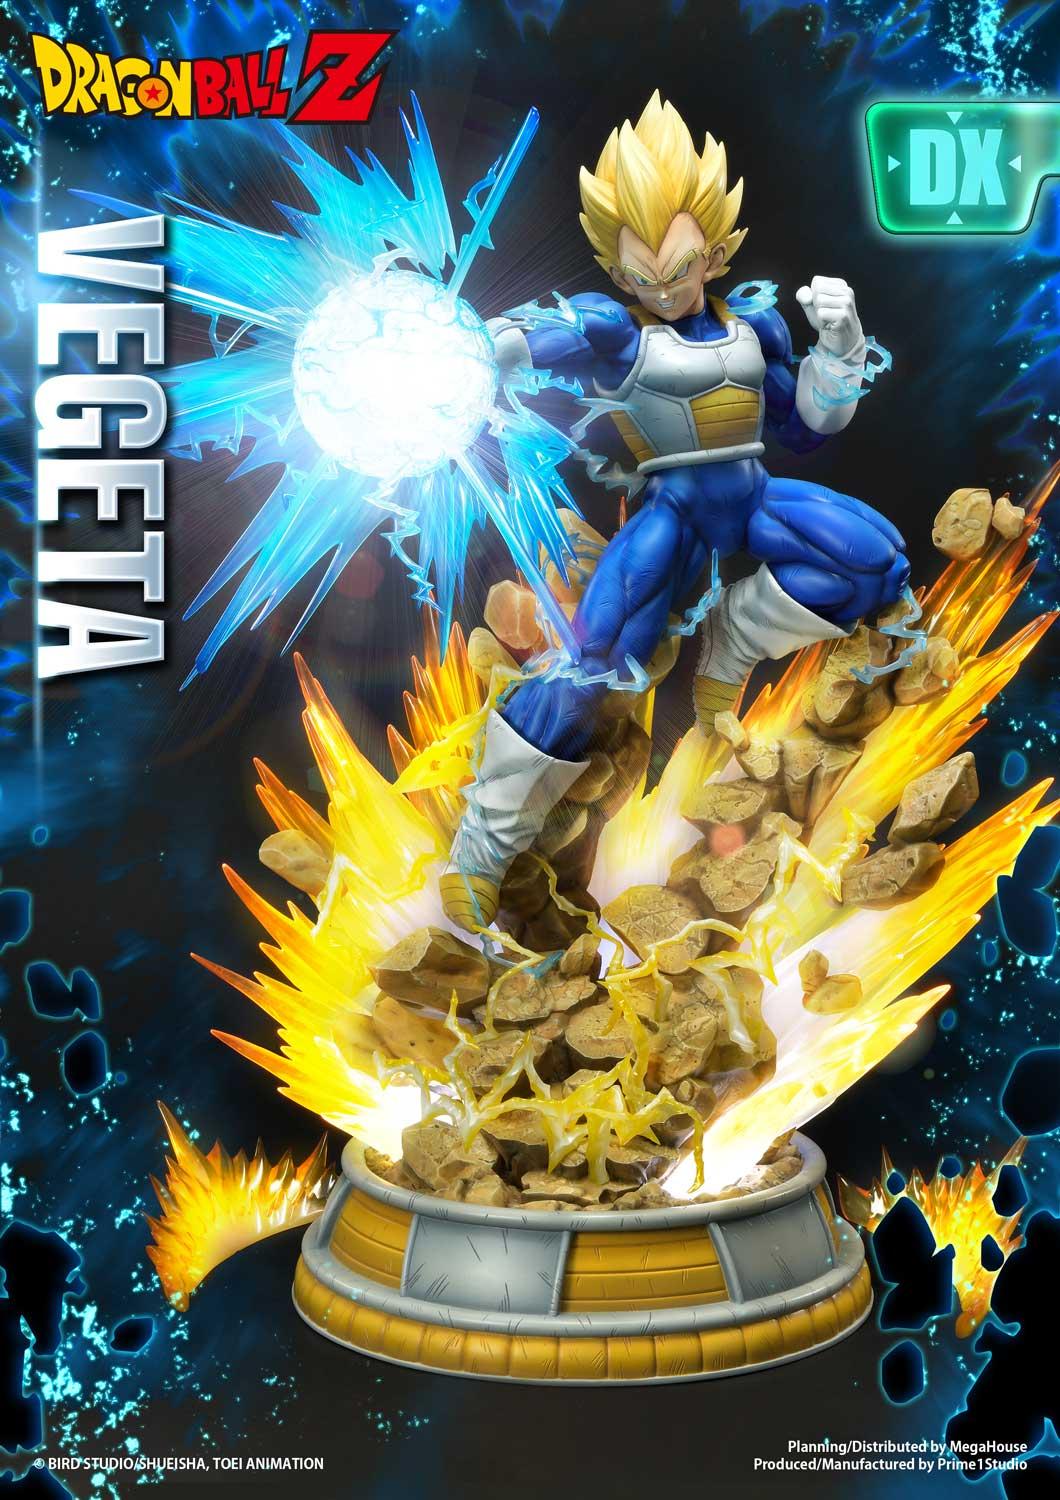 Dragon Ball Z Goku Vegeta Anime Premium POSTER MADE IN USA